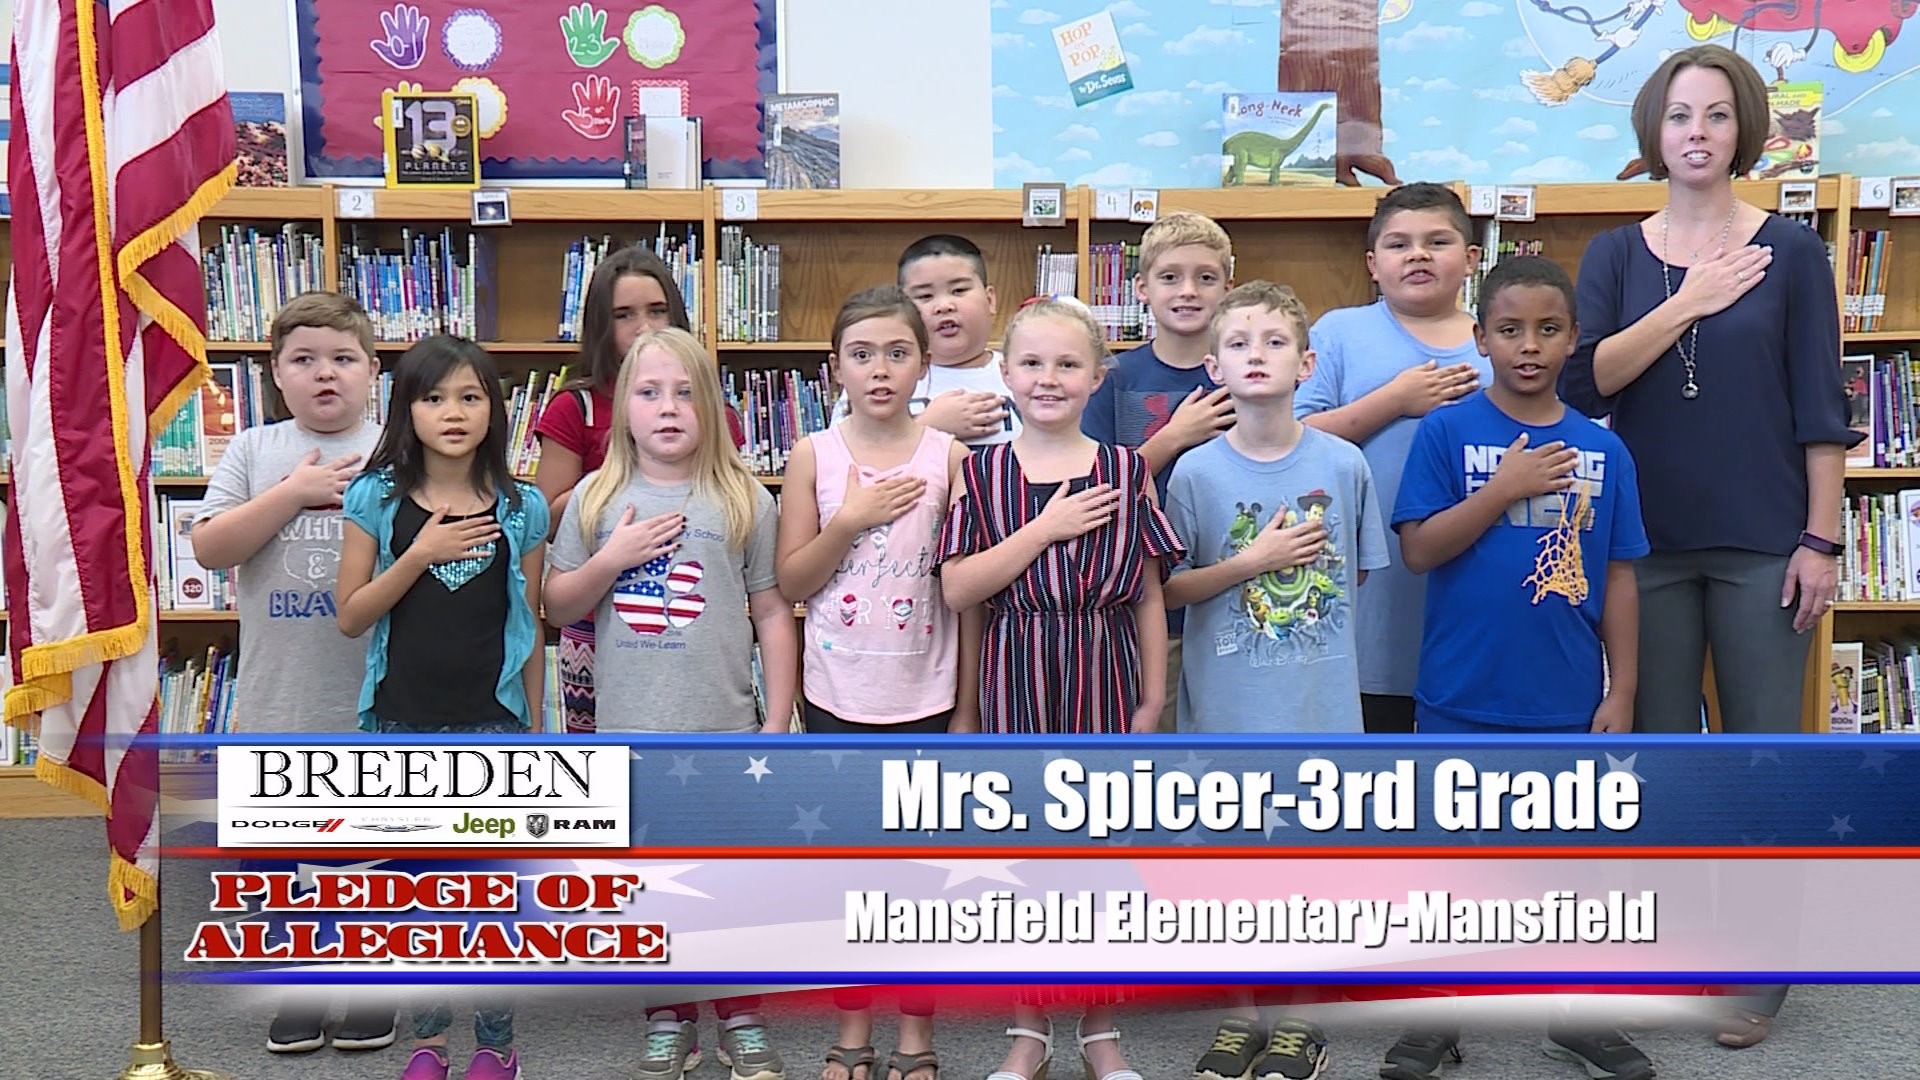 Mrs. Spicer  3rd Grade Mansfield Elementary, Mansfield